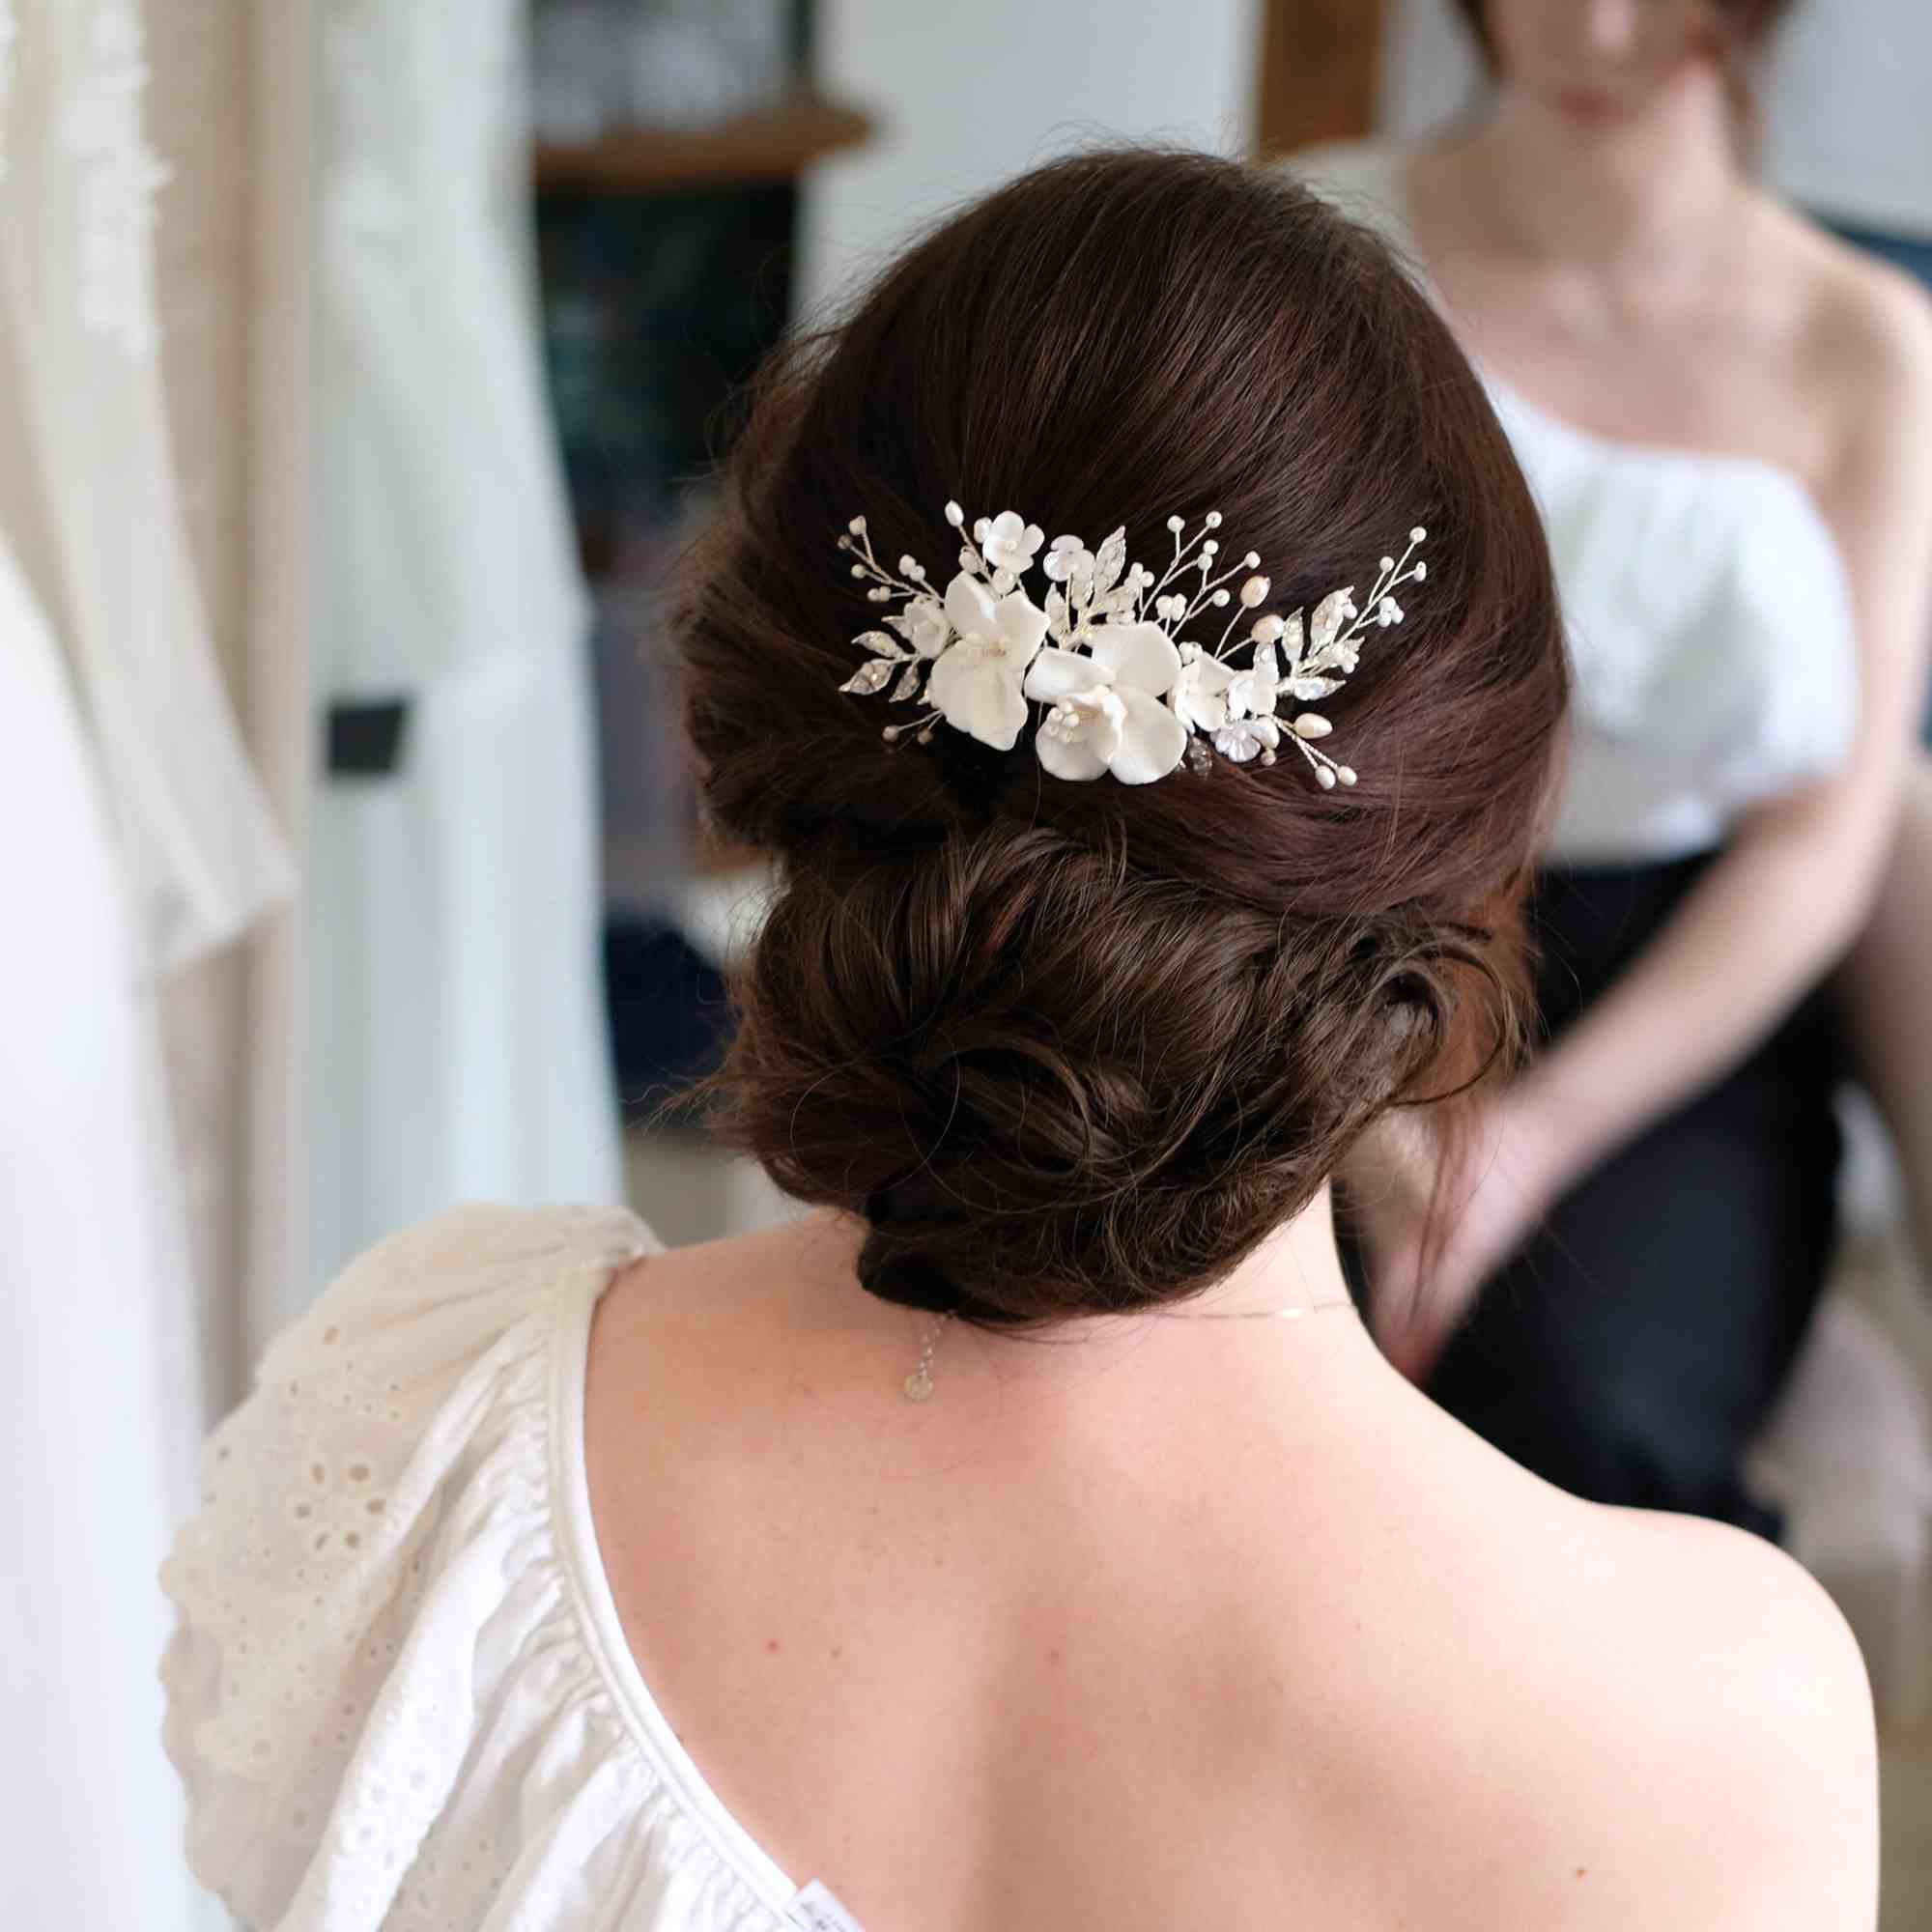 Bridal Hair Jewelry, Hair Comb Bridal Wedding Hair Accessories - Ceramic Flowers BOHO - High Quality Bridal Hair Jewelry by Bridal Jewelry Vumari SKU-67, SKU-68.